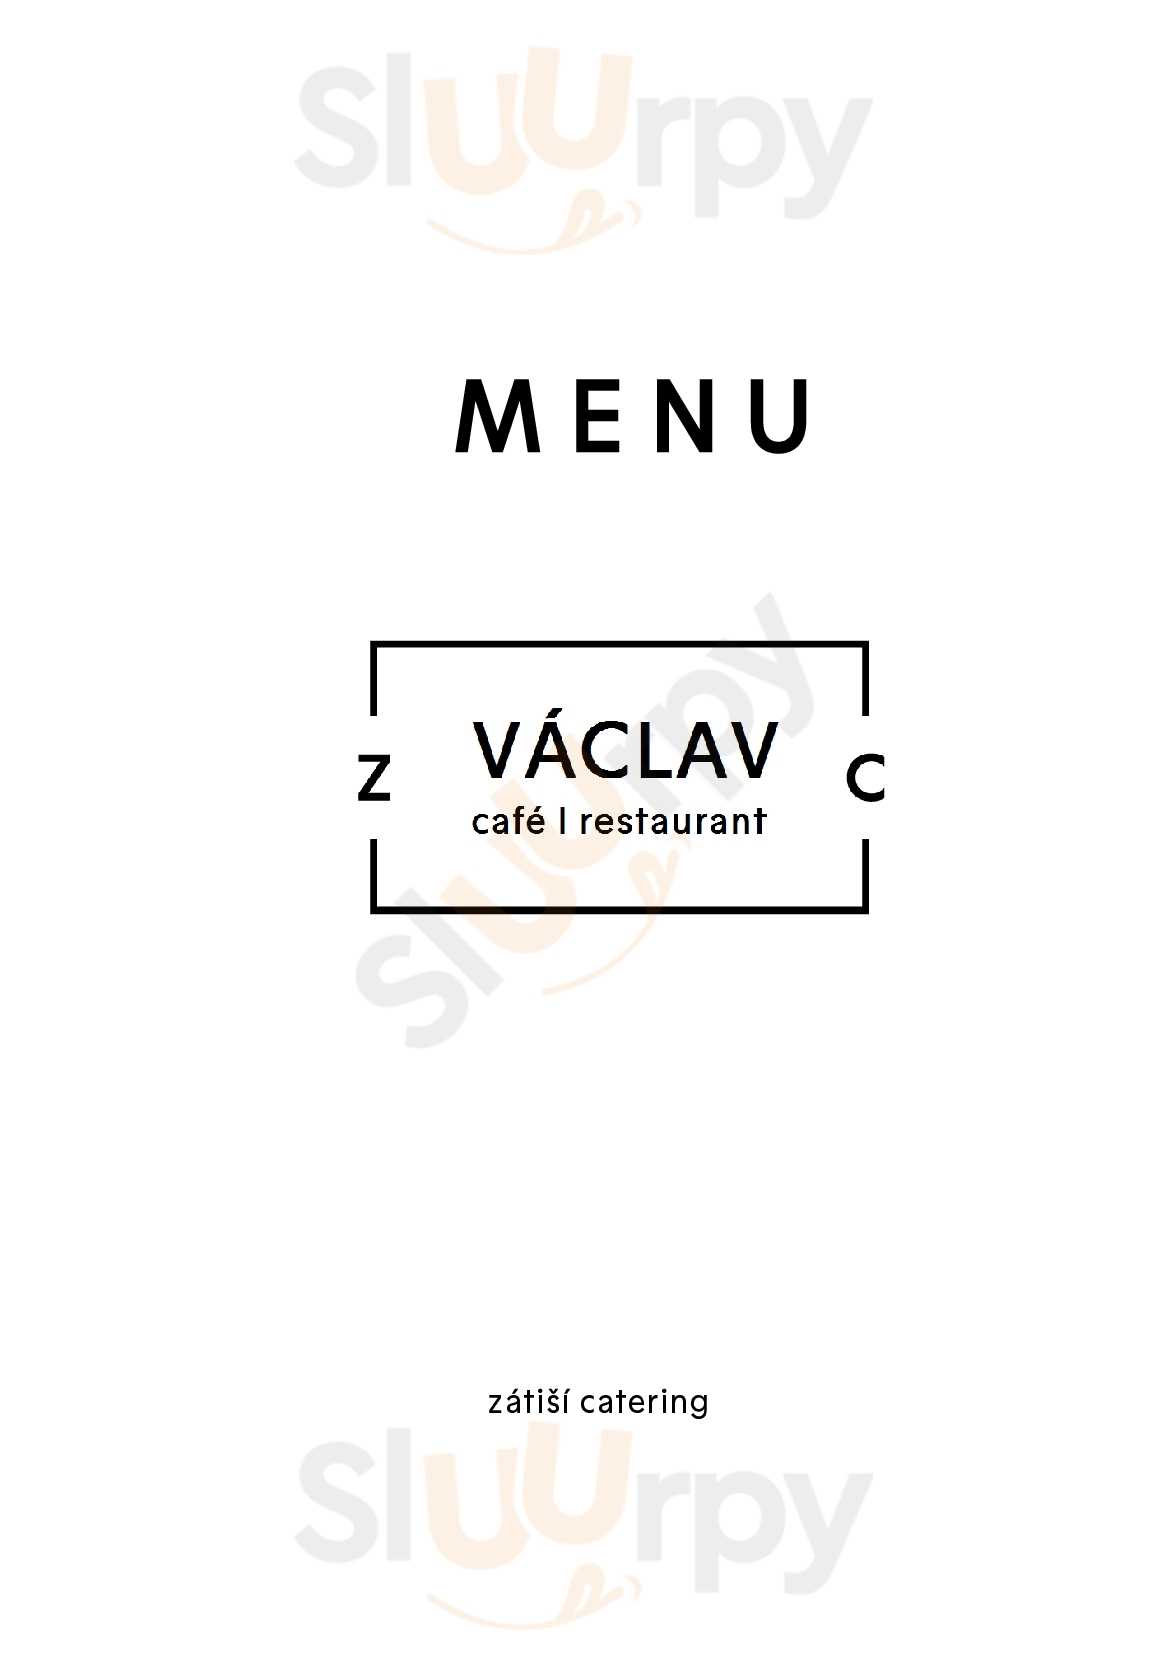 Café Restaurant Václav Mladá Boleslav Menu - 1